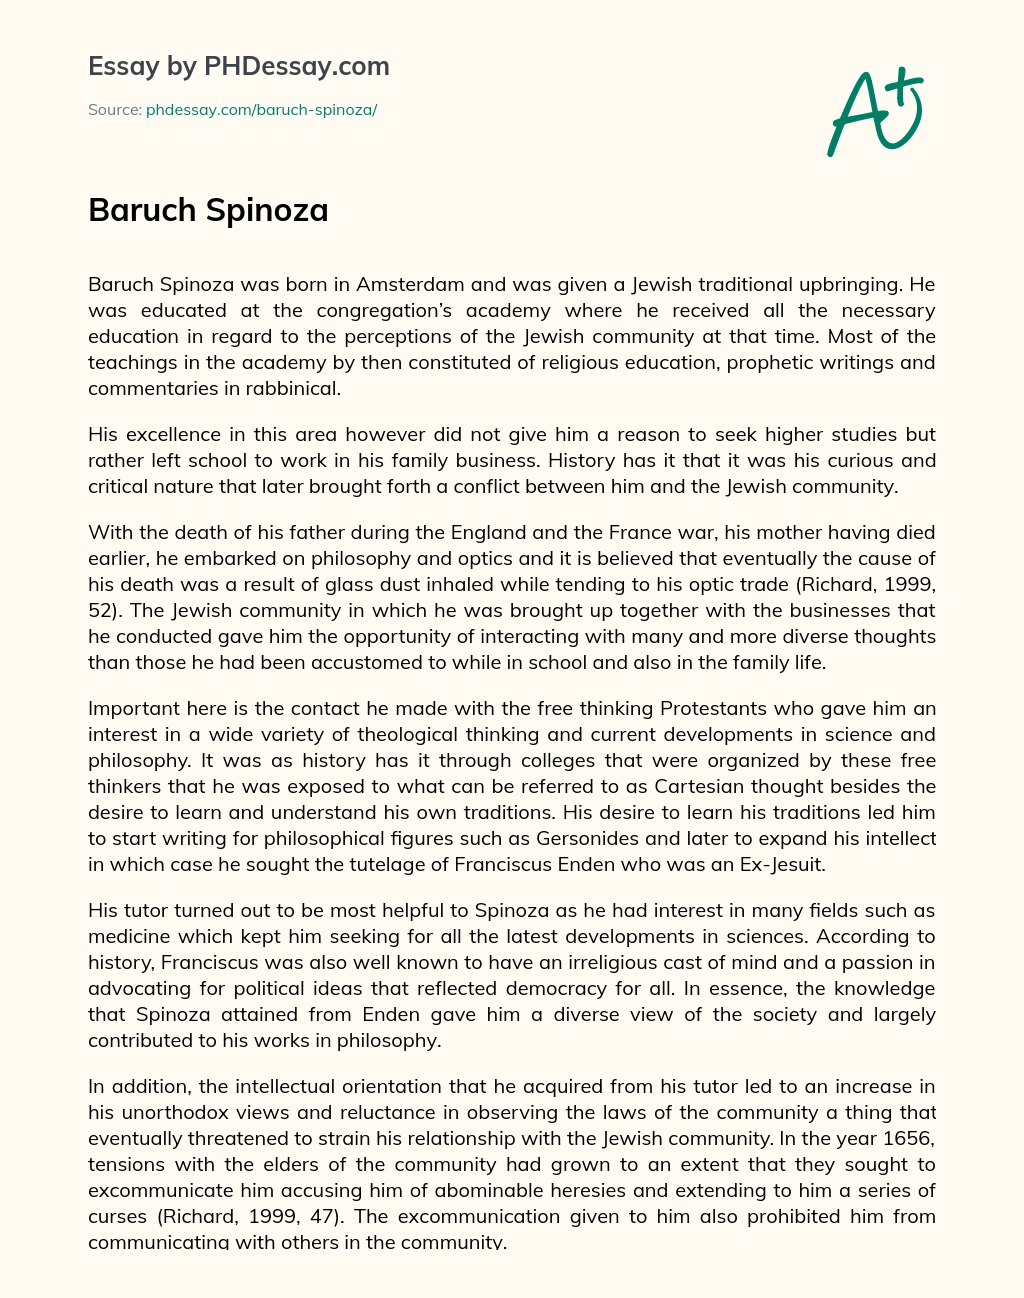 Baruch Spinoza essay